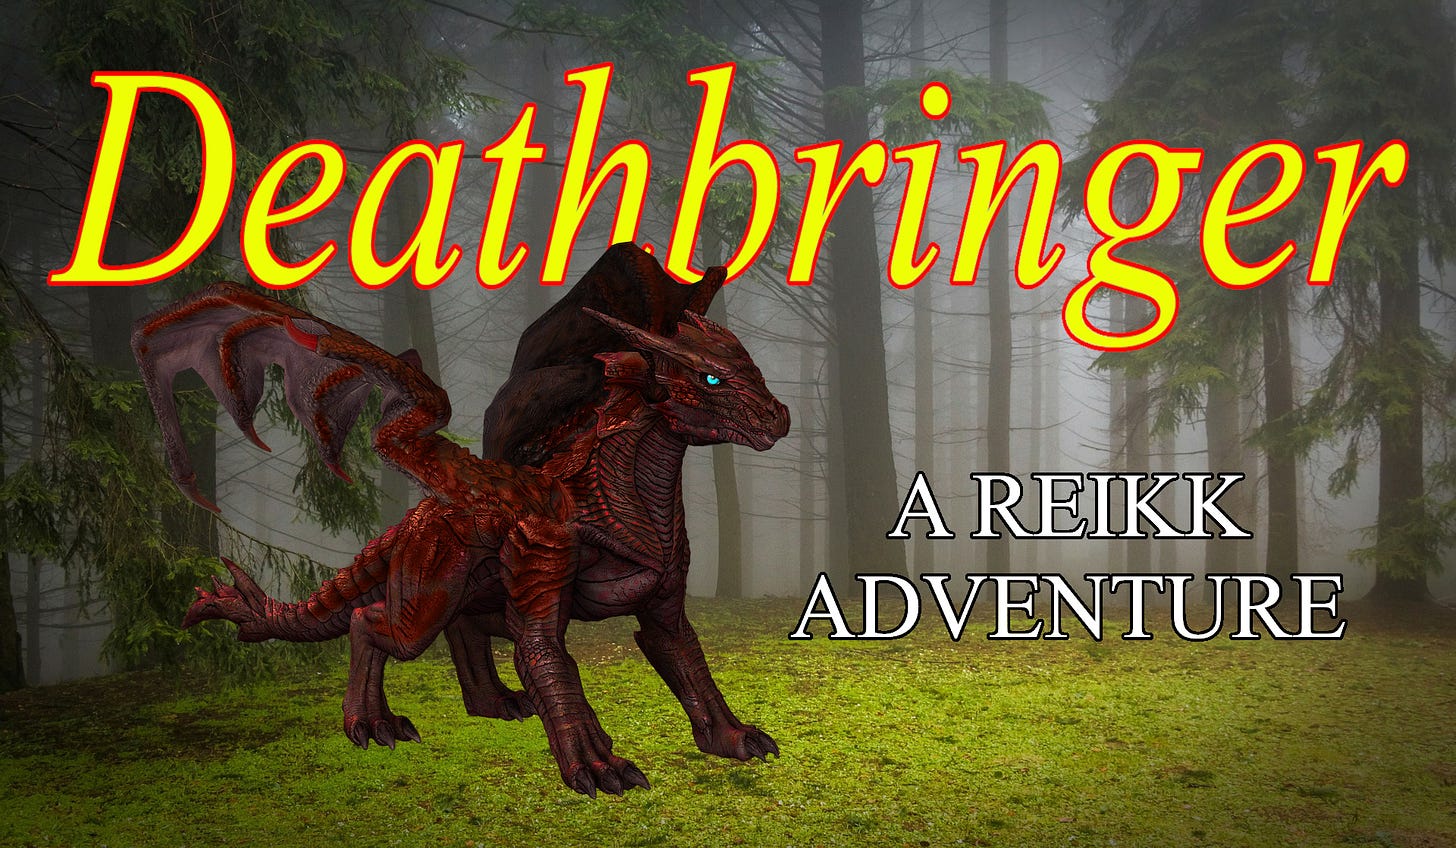 Deathbringer -- A Reikk Adventure